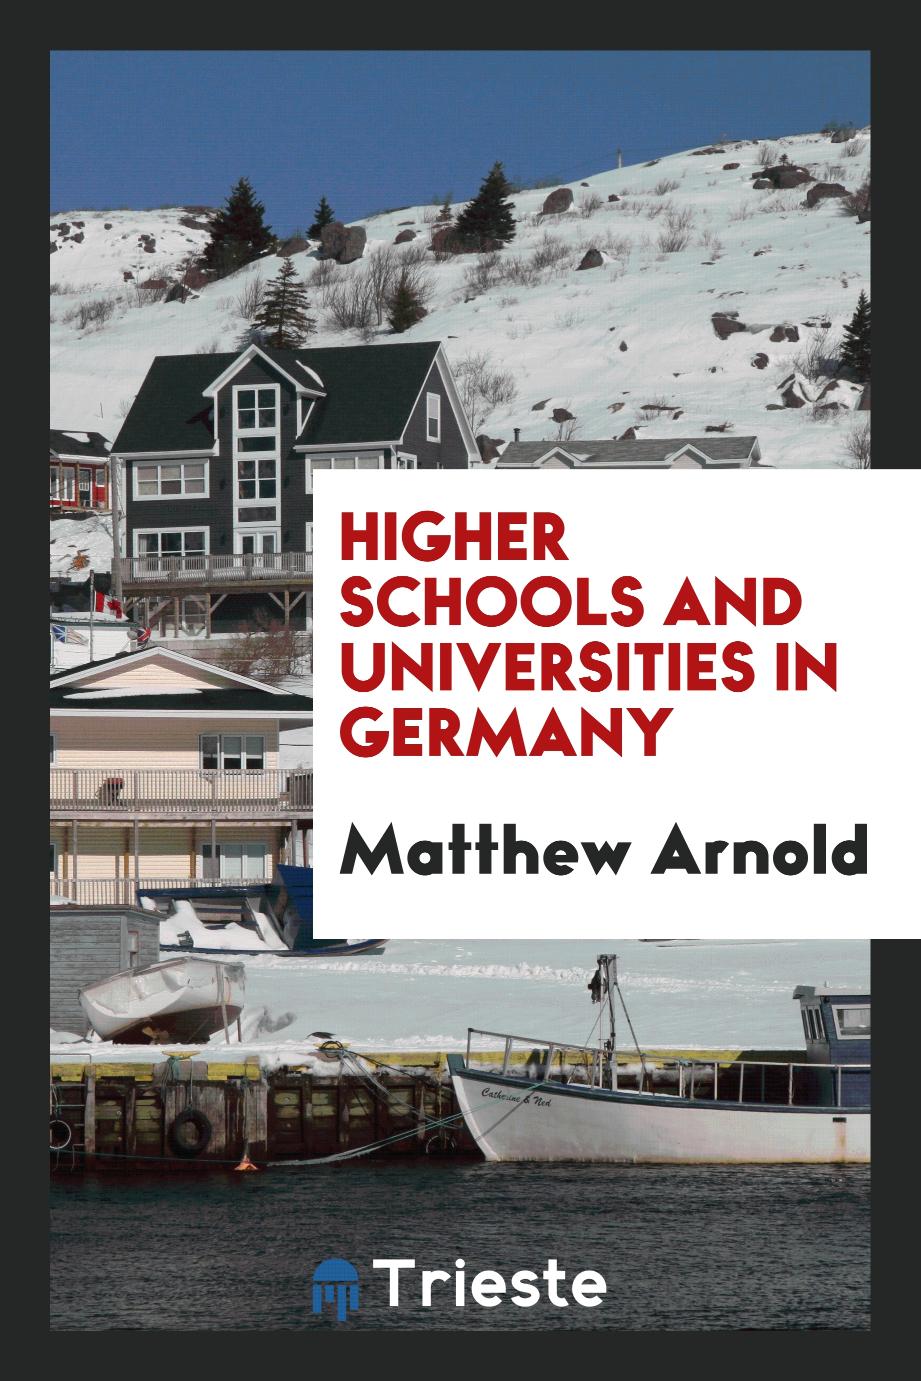 Higher schools and universities in Germany